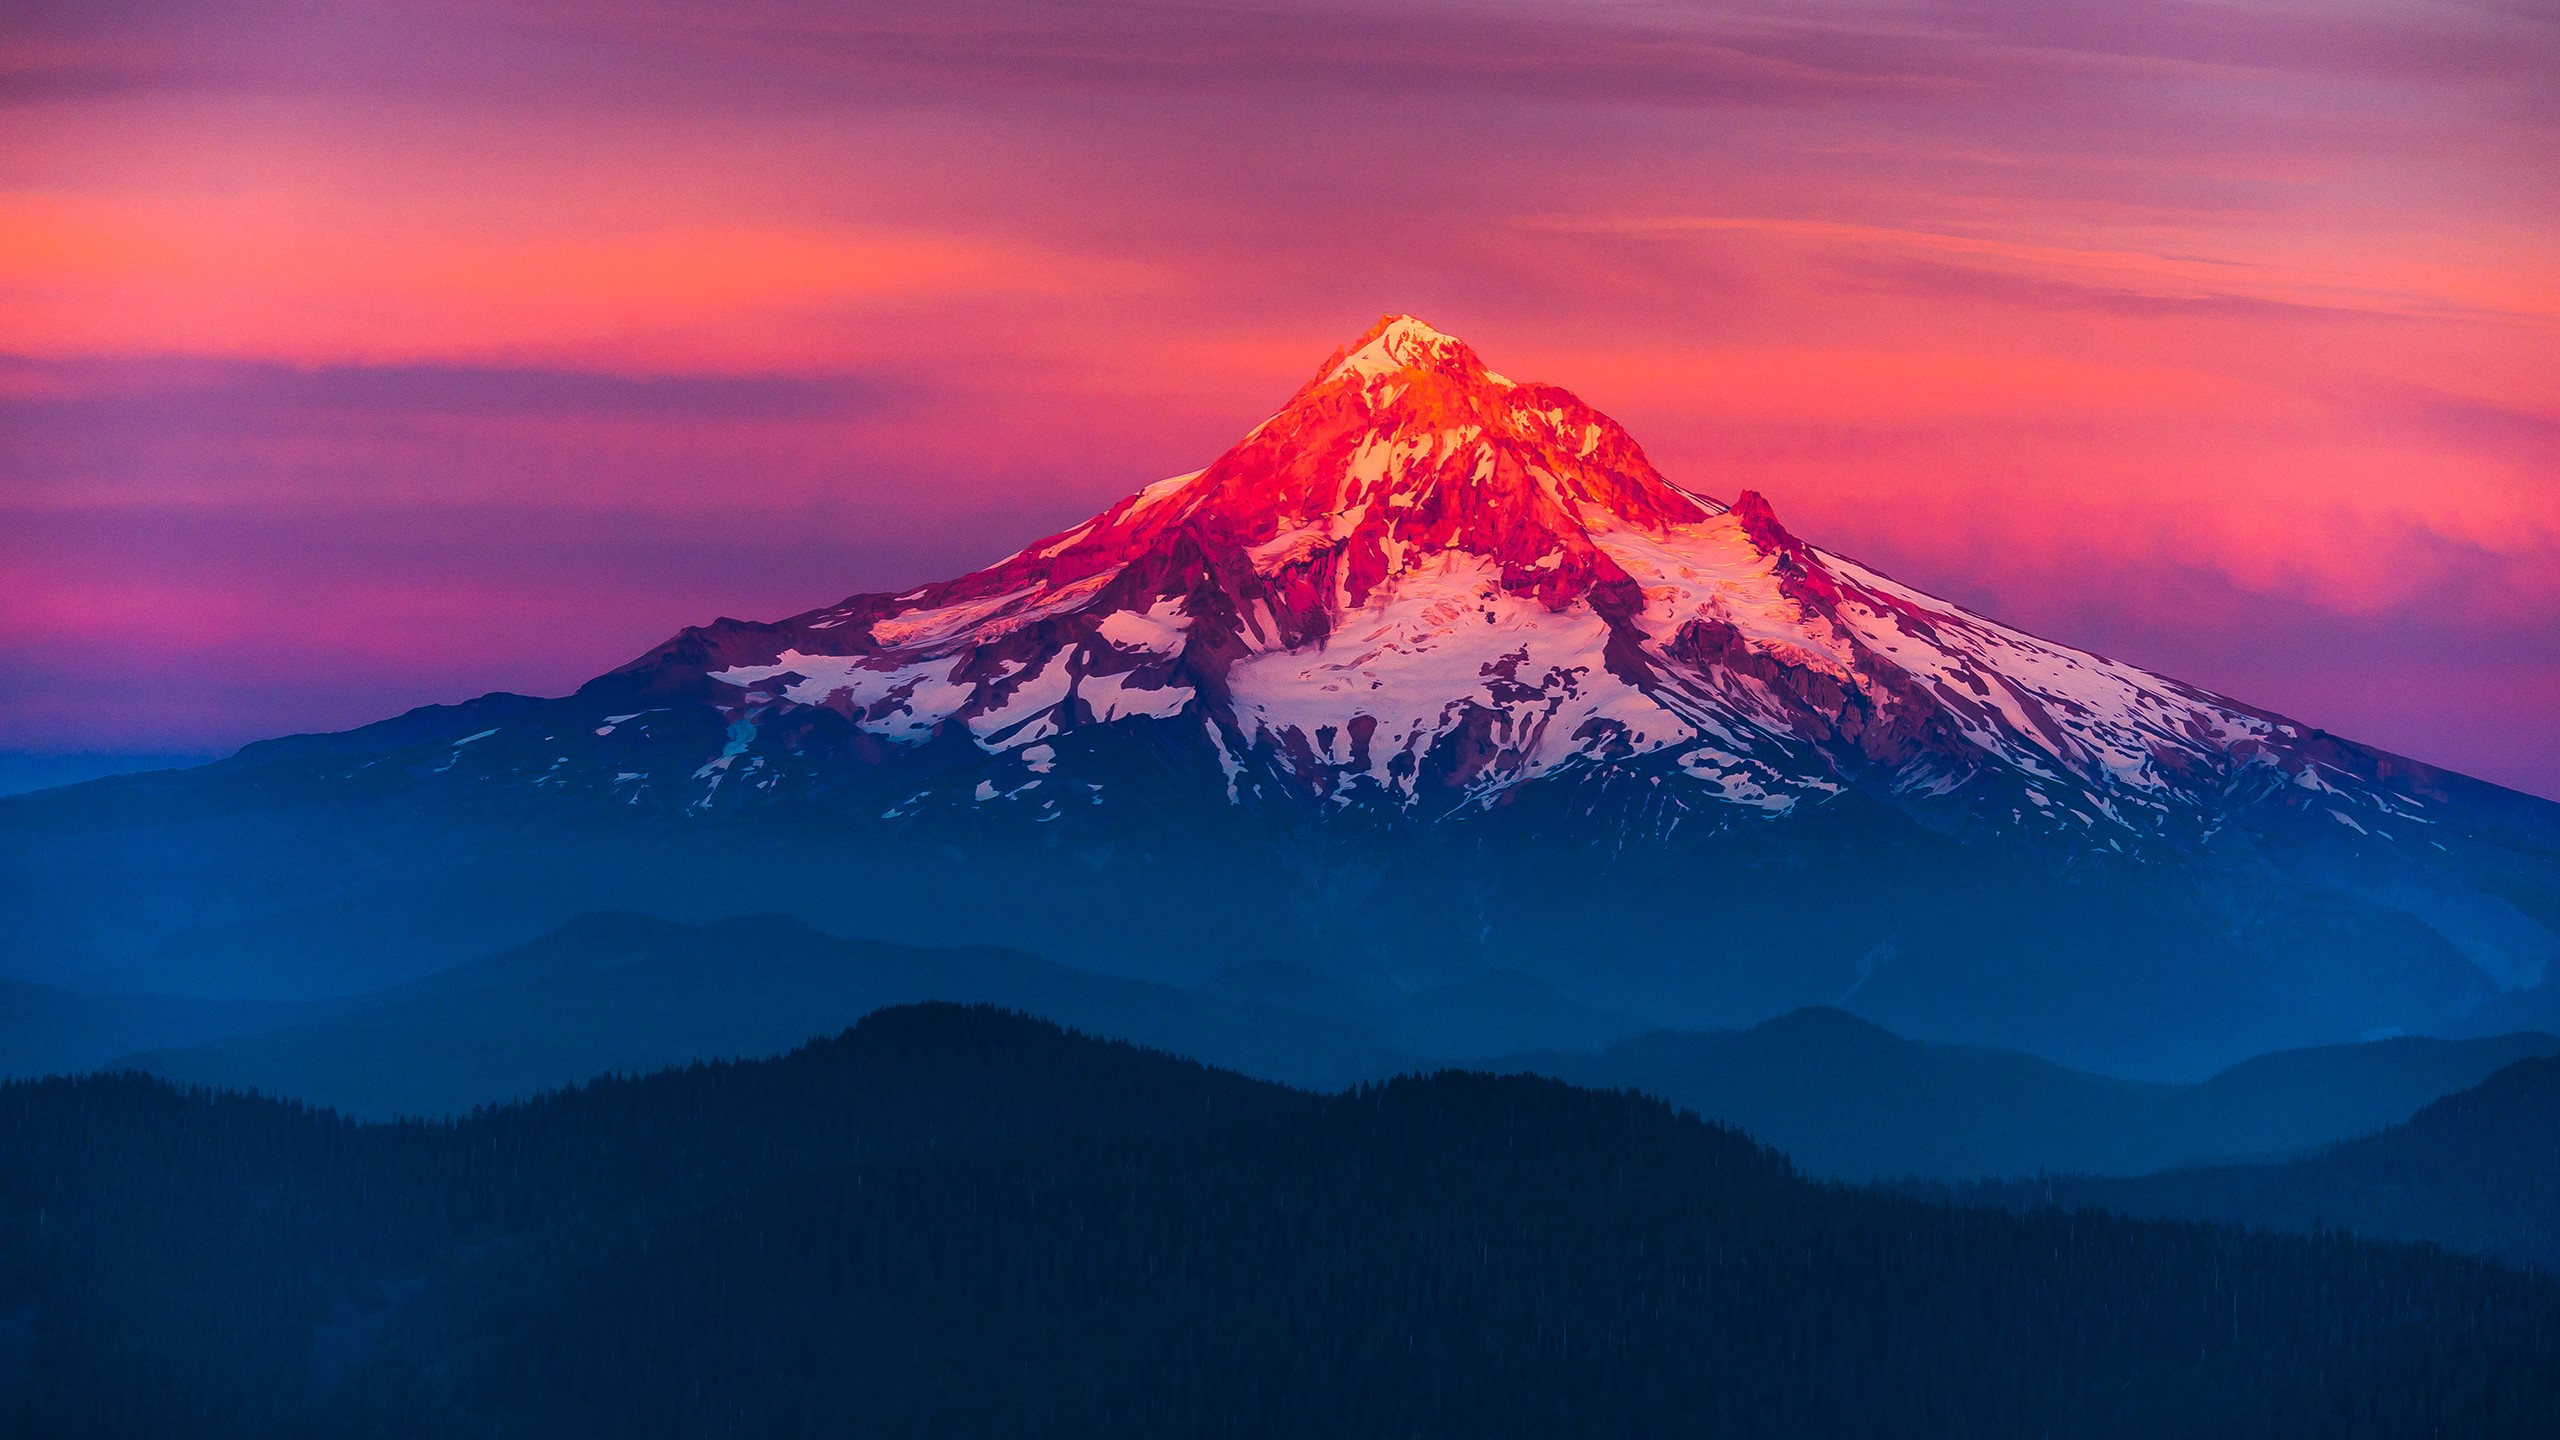 General 2560x1440 mountains larch mountain Oregon nature sky sunlight landscape USA Mount Hood